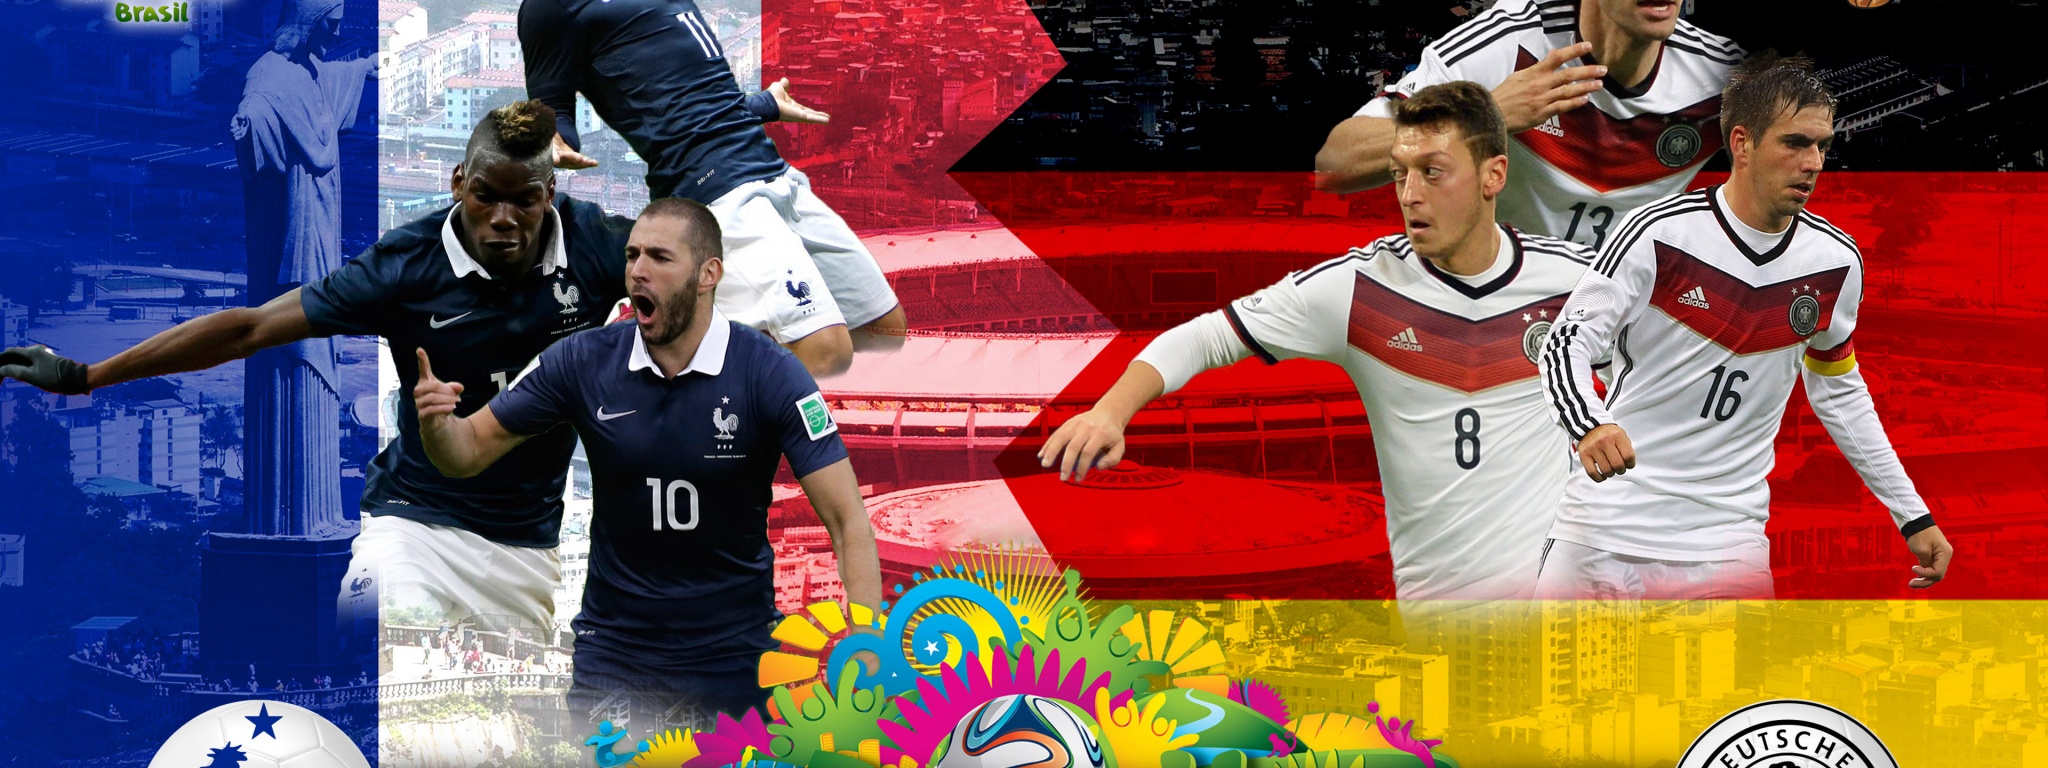 France Vs Germany Quarter Finals